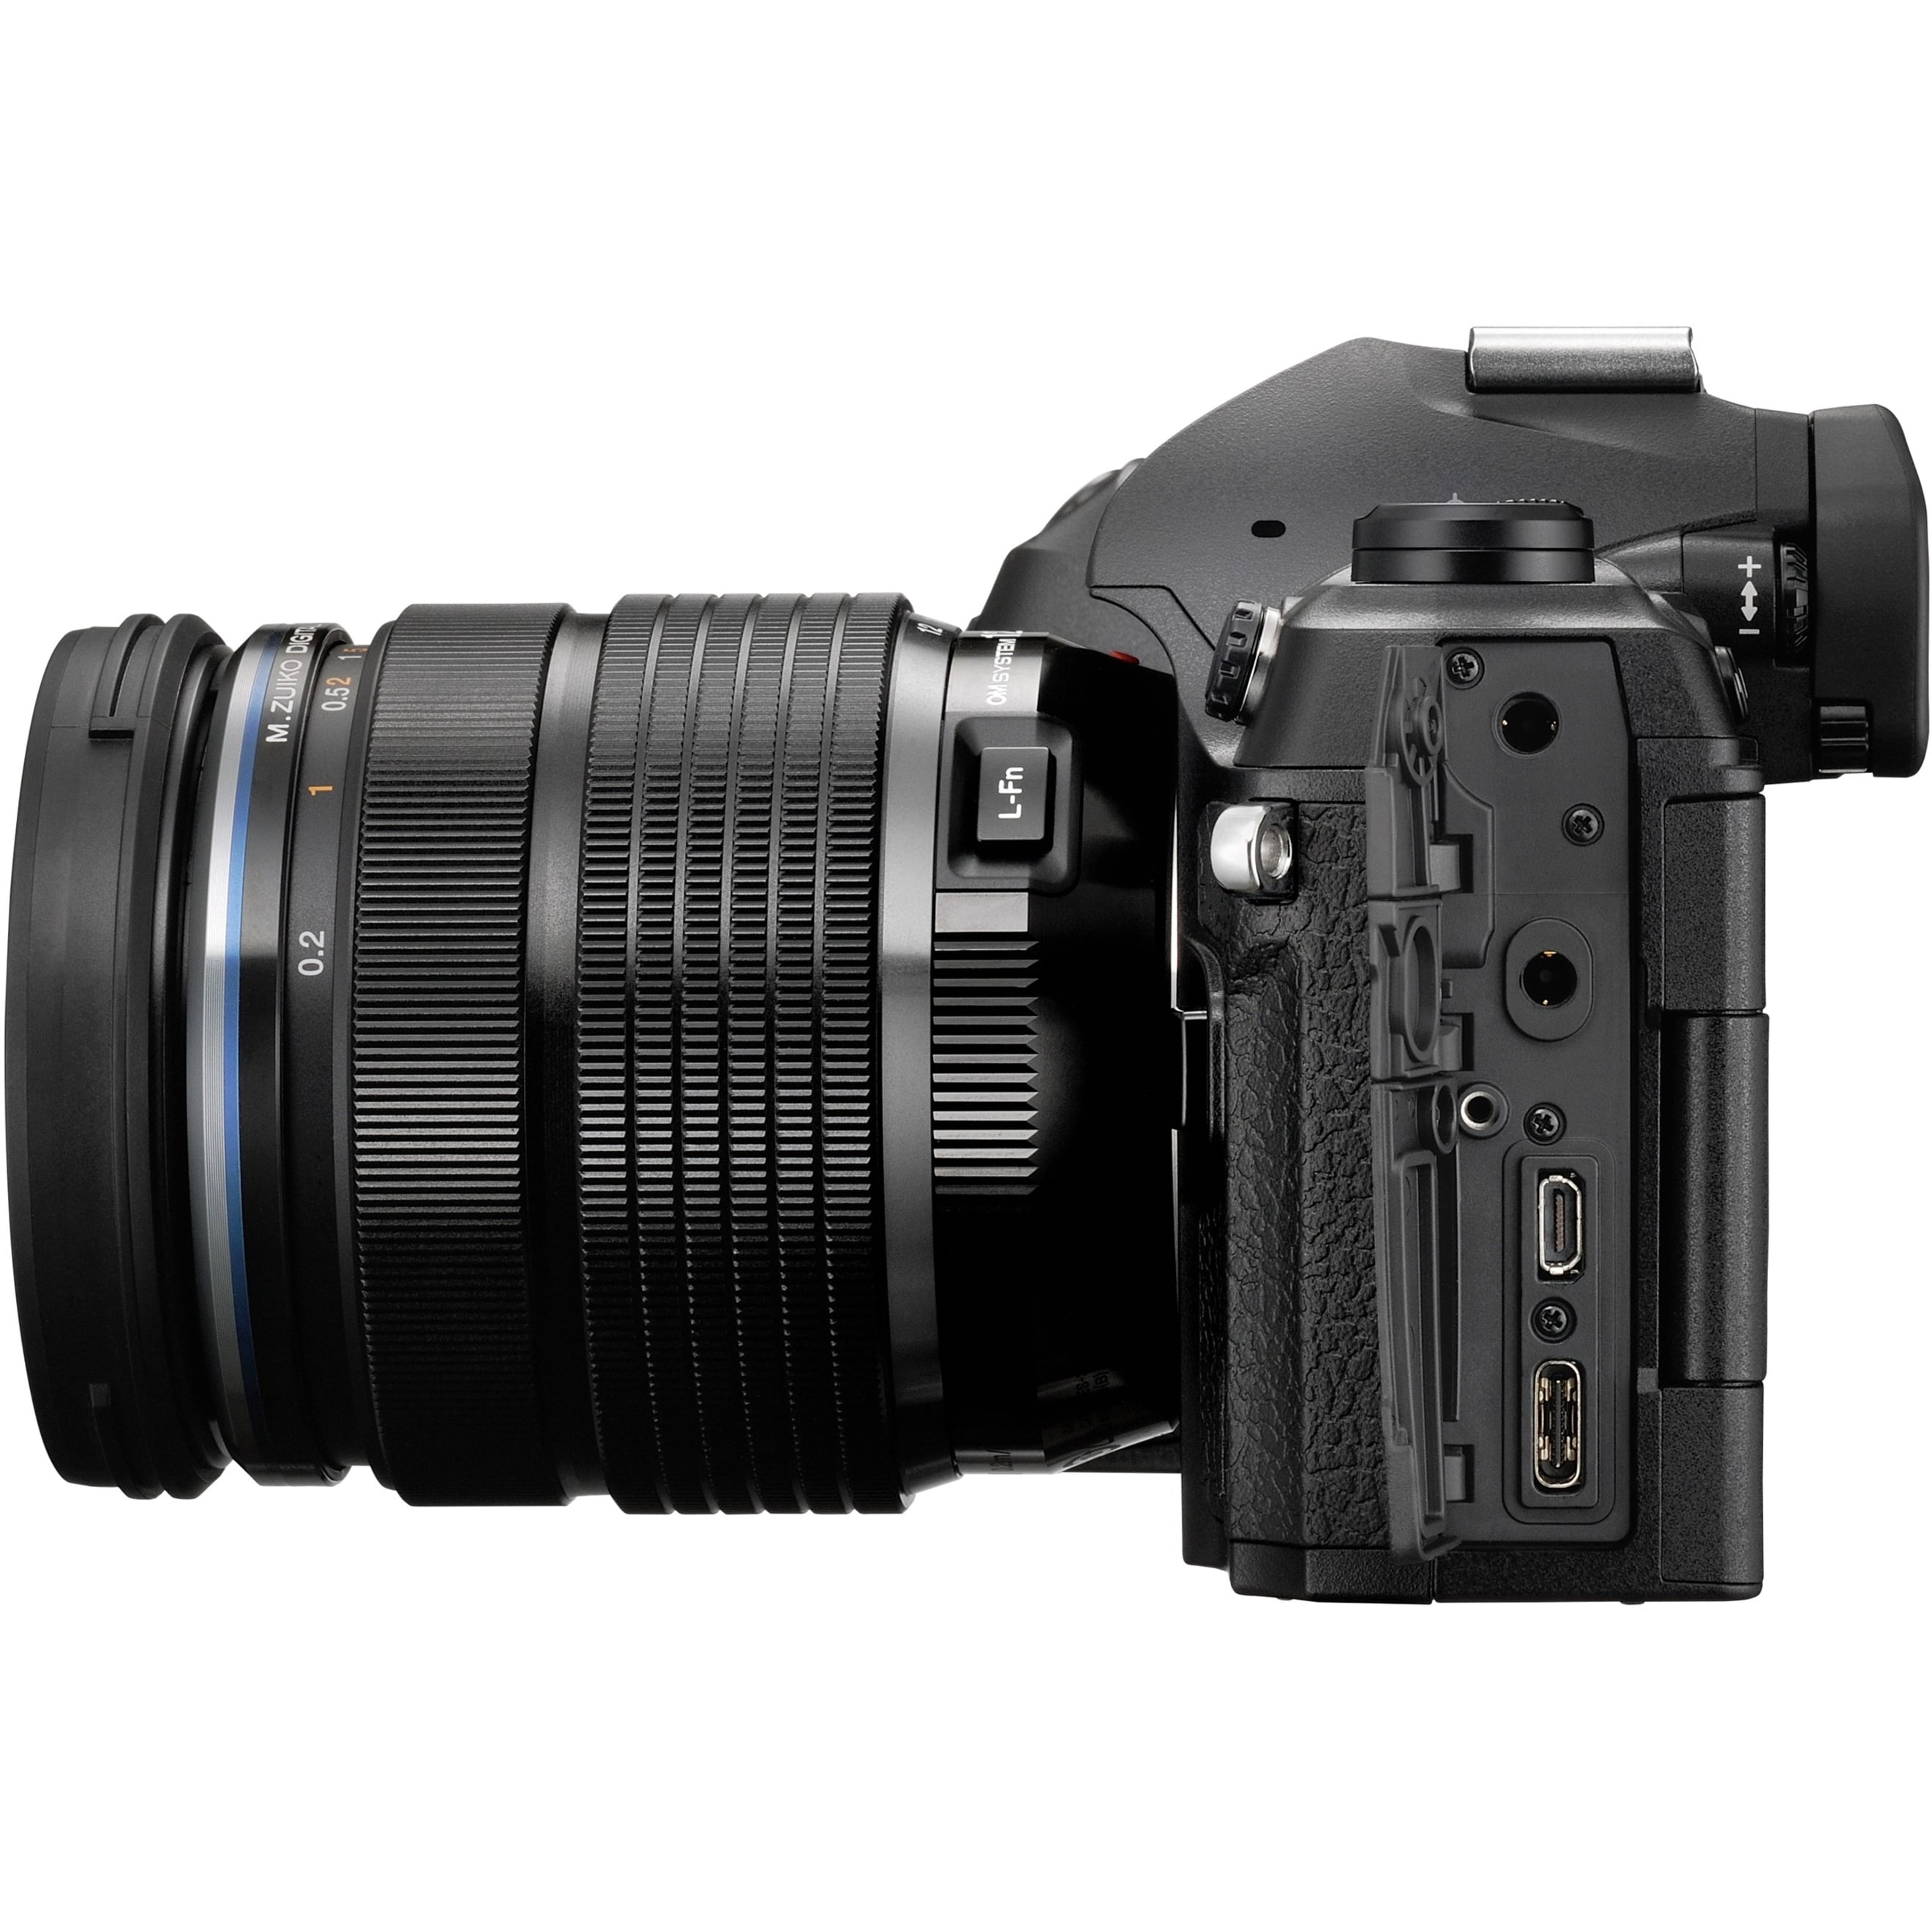 Olympus OM SYSTEM OM-1 20.4 Megapixel Mirrorless Camera with Lens, 0.47,  1.57, Black